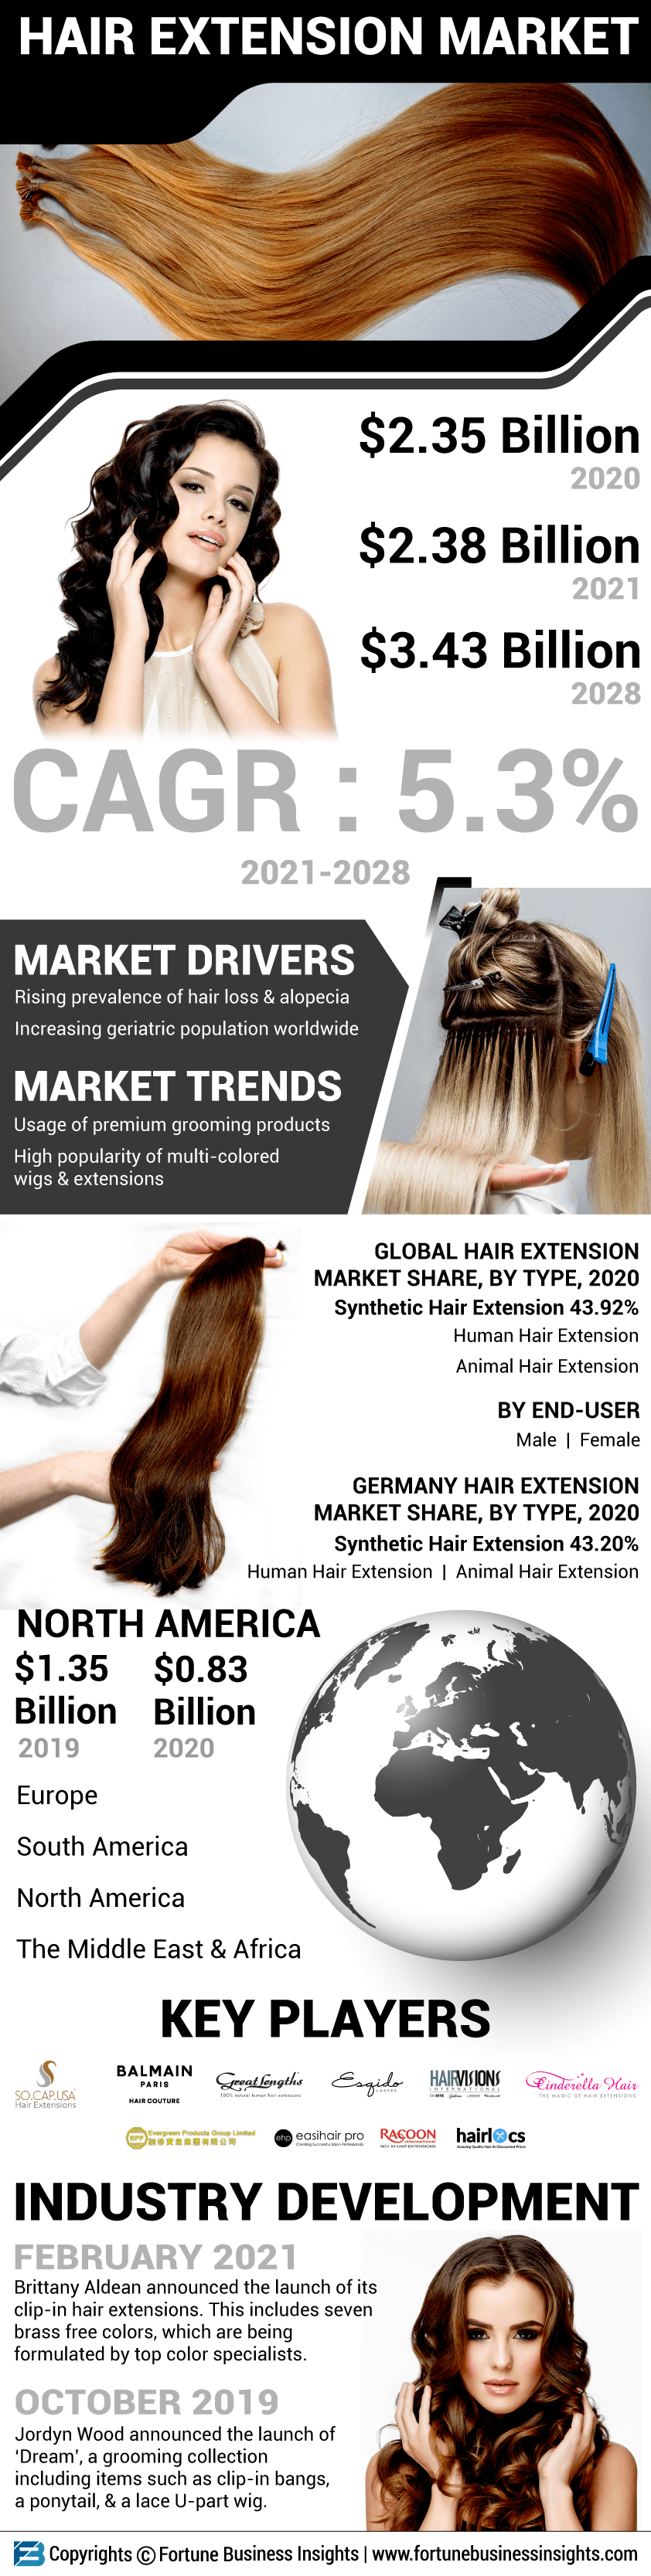 Hair Extension Market